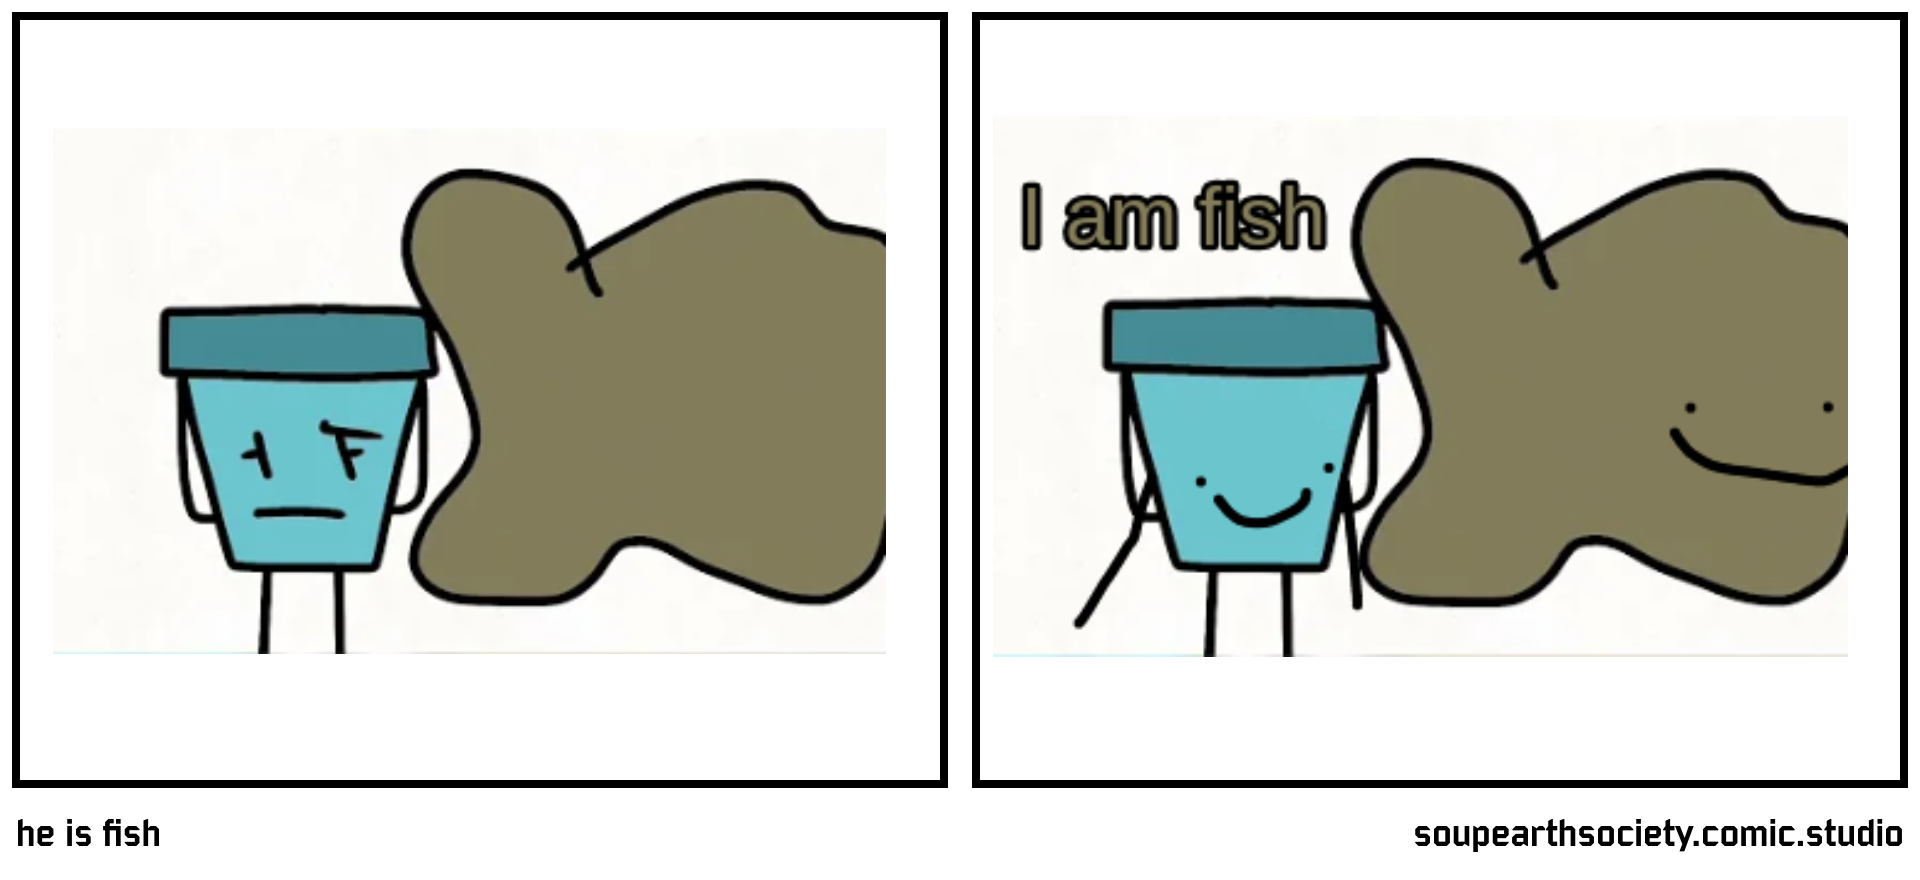 he is fish